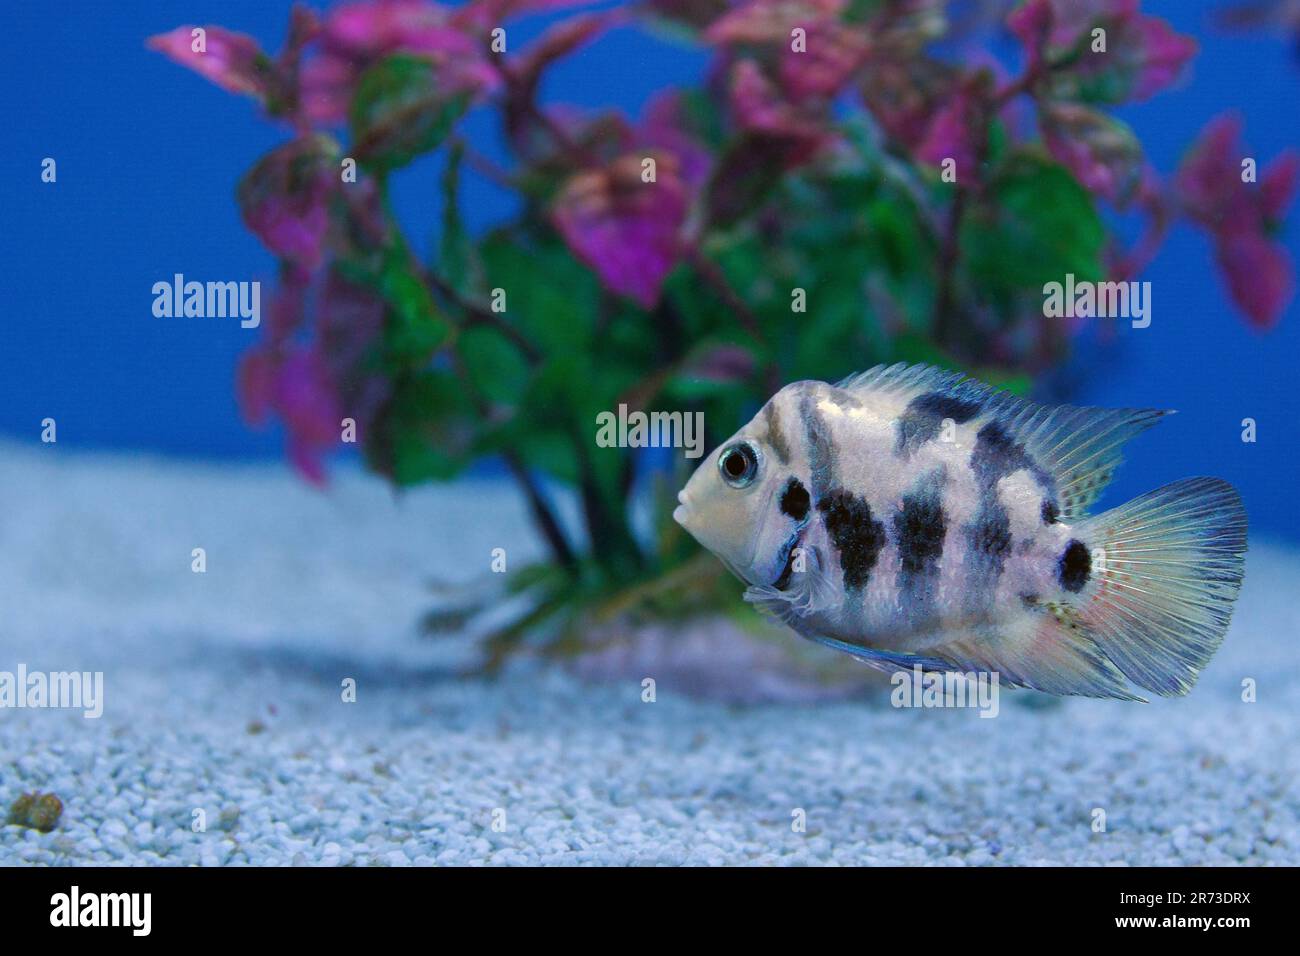 The convict cichlid fish - (Amatitlania nigrofasciata) Stock Photo